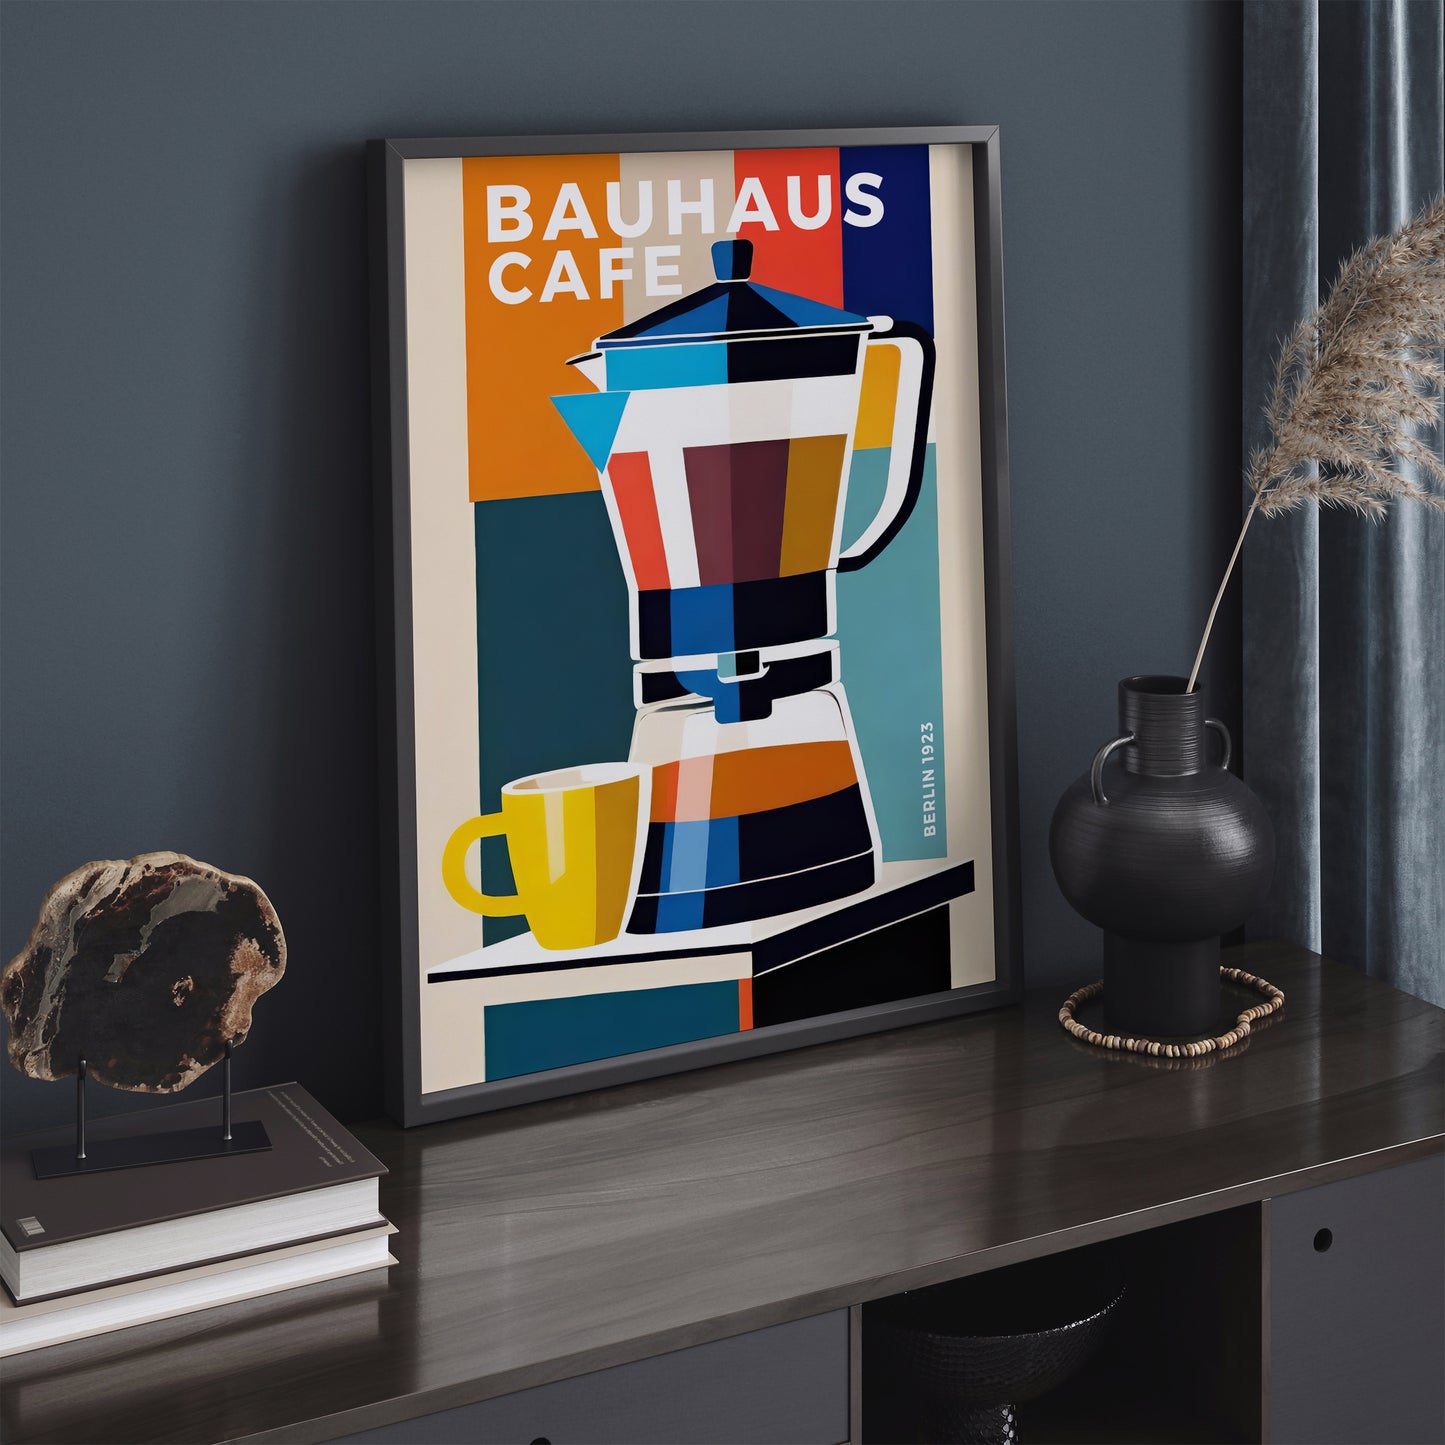 Bauhaus Cafe Berlin Poster